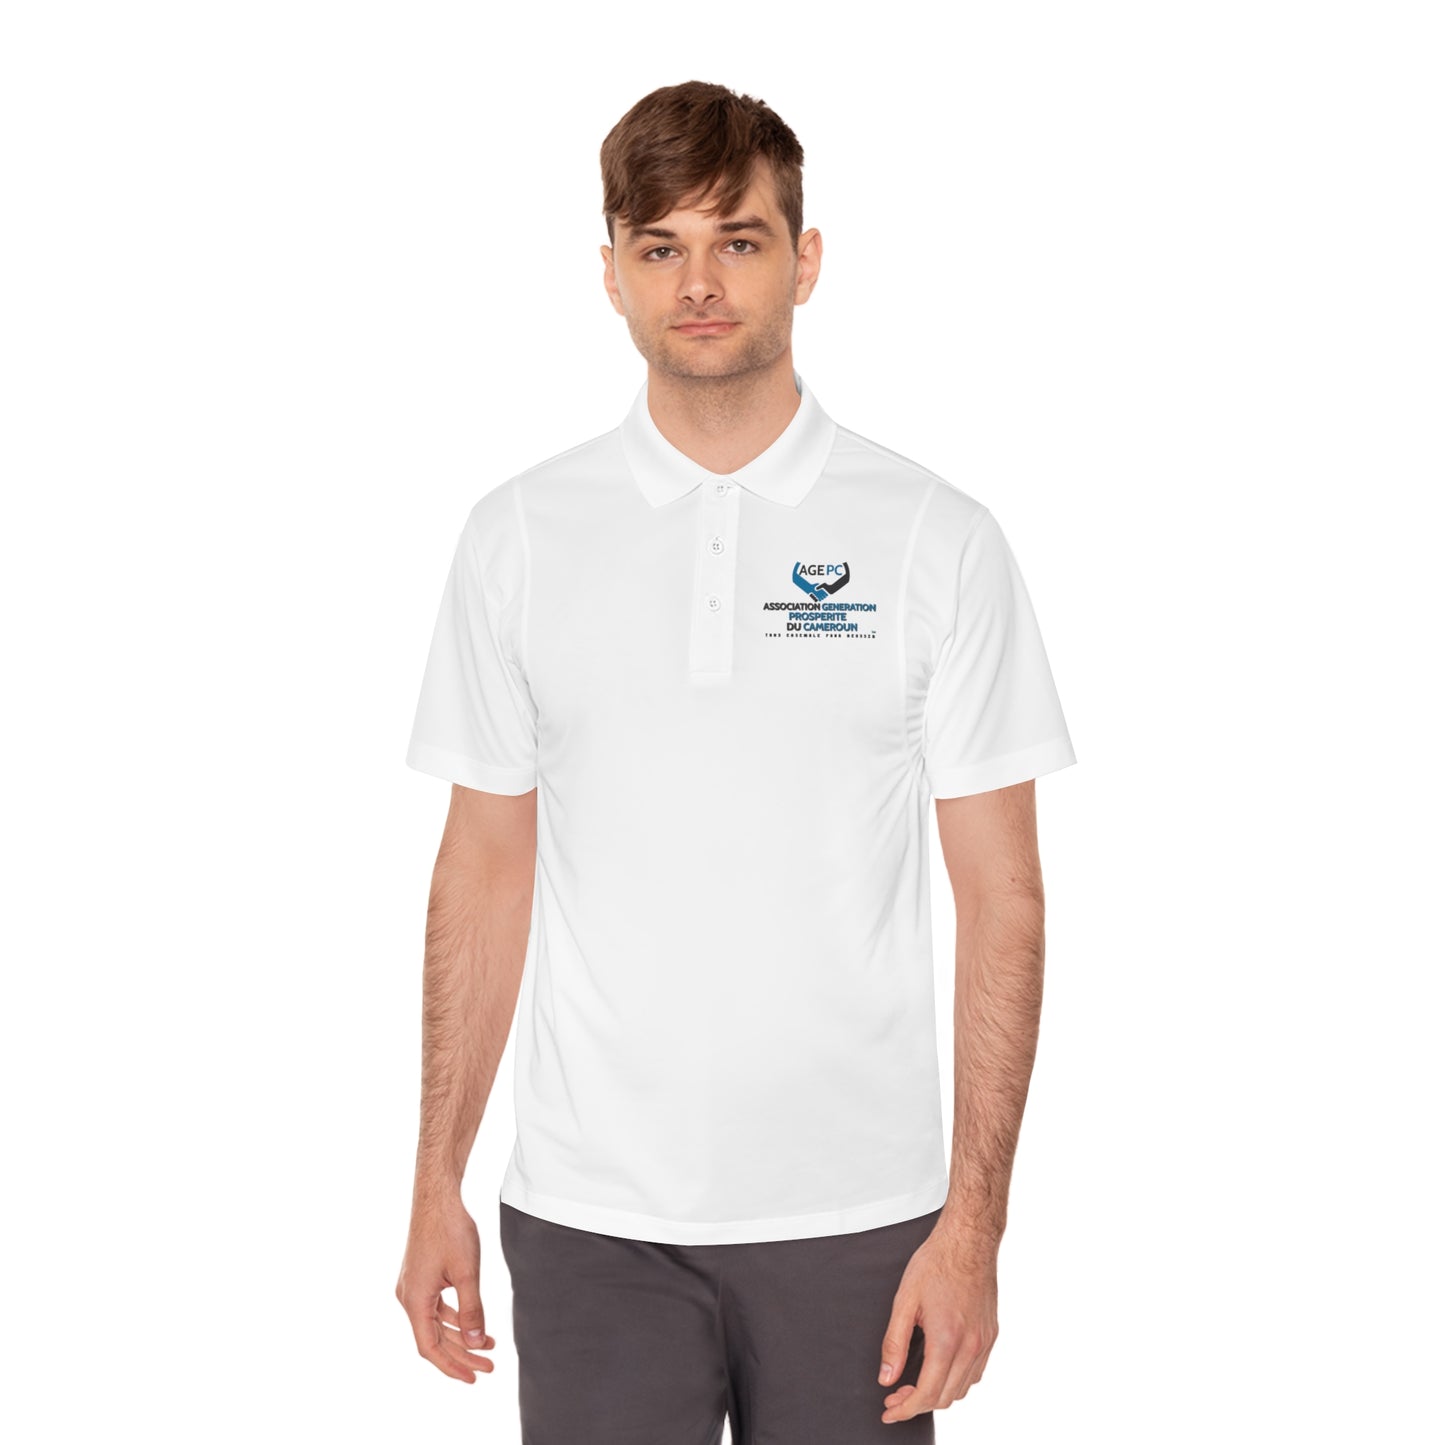 TSALACK EXPRESS AGEPC Men's Sport Polo Shirt